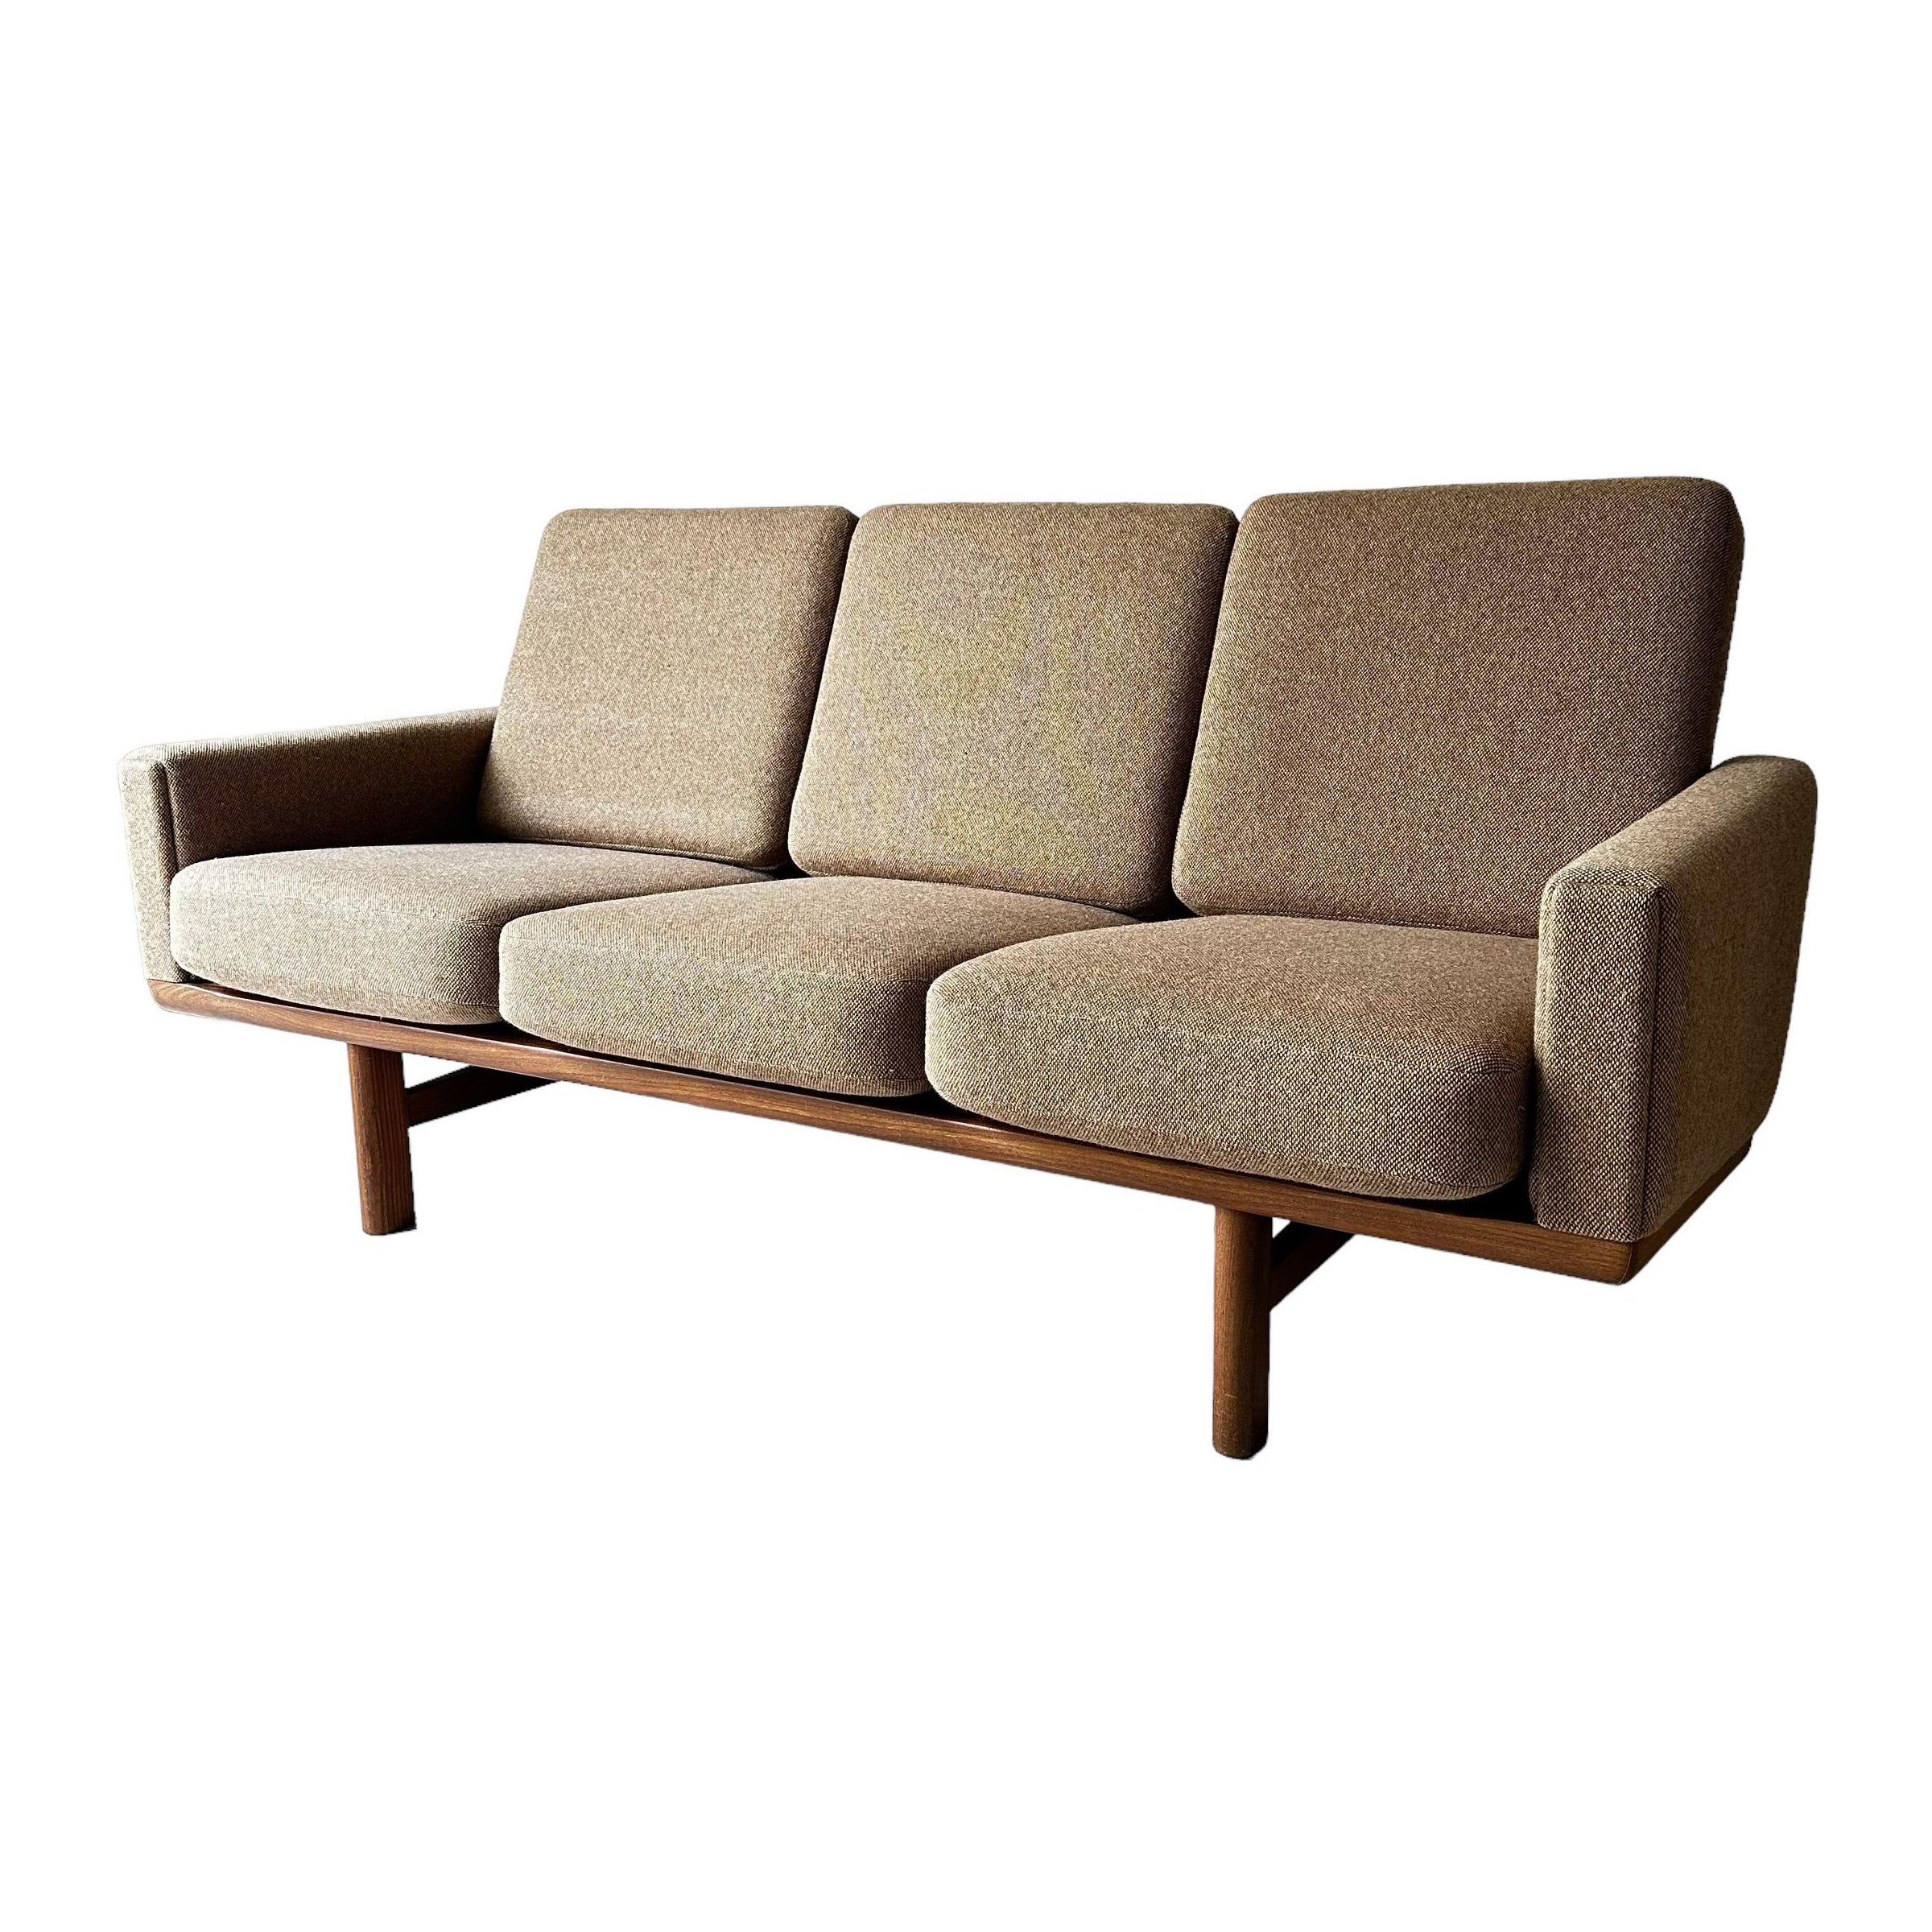 Three-Seat Teak-Framed Sofa, Model GE-236, by Hans Wegner for GETAMA For Sale